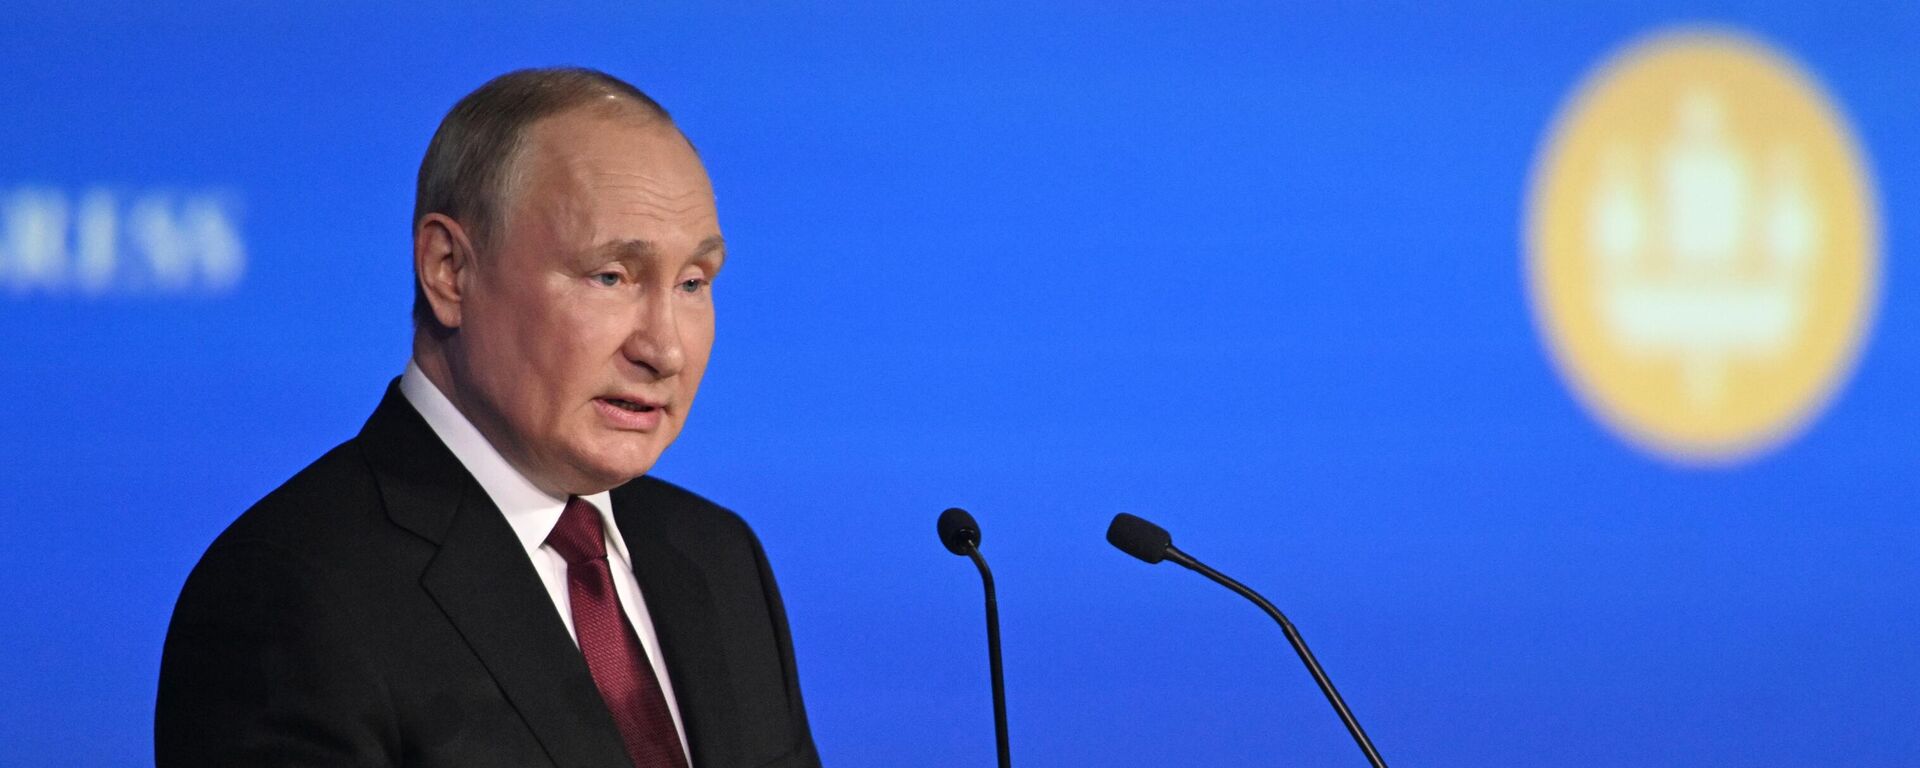 Russian President Vladimir Putin speaking at St. Petersburg International Economic Forum (SPIEF) 2022 - Sputnik International, 1920, 17.06.2022